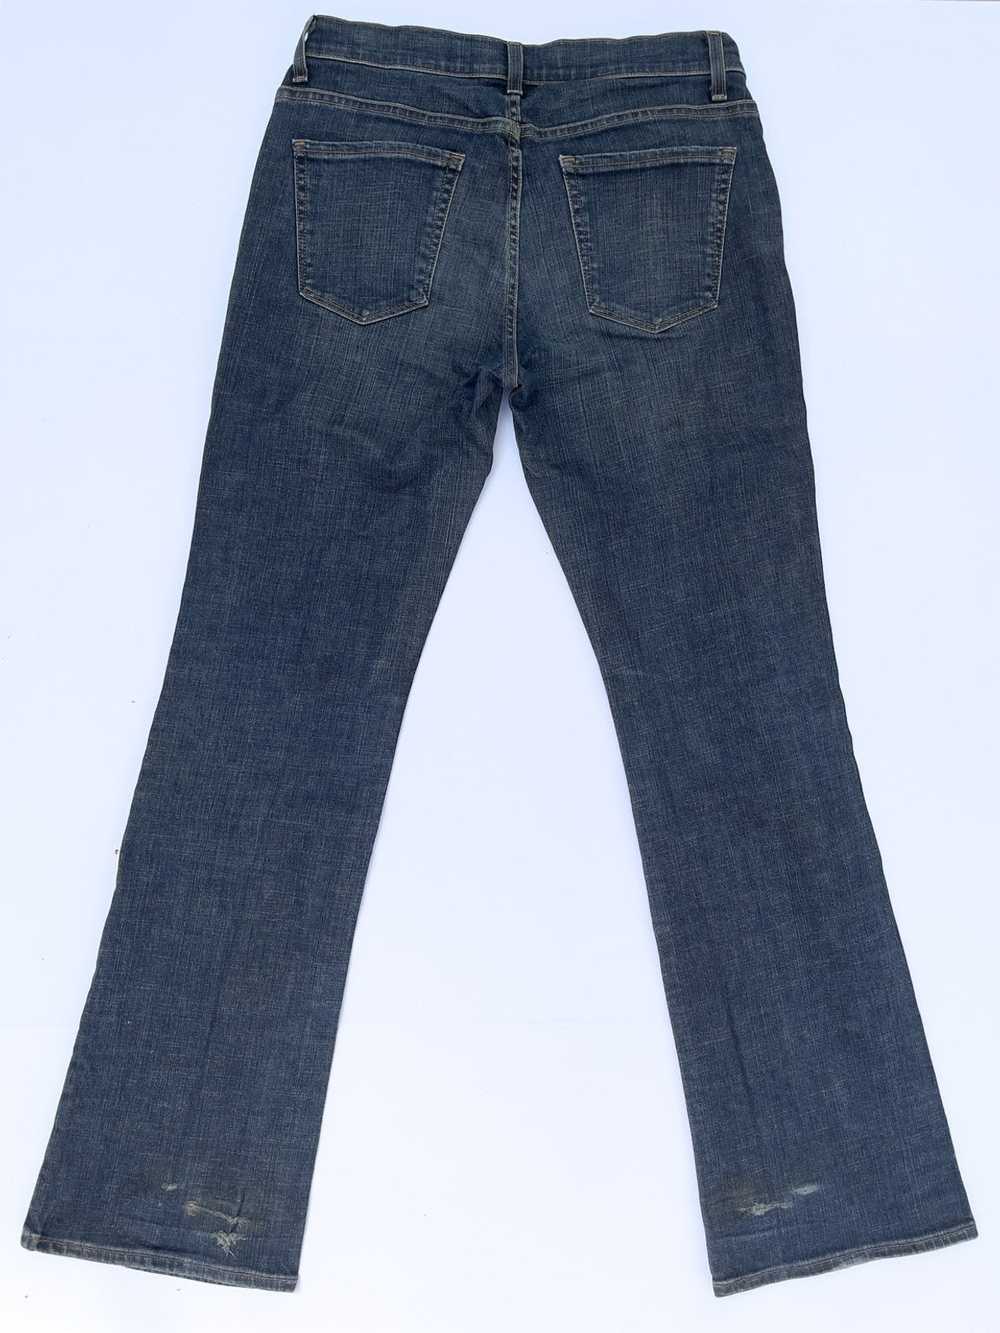 Gap Low Rise Boot Cut Jeans - image 3